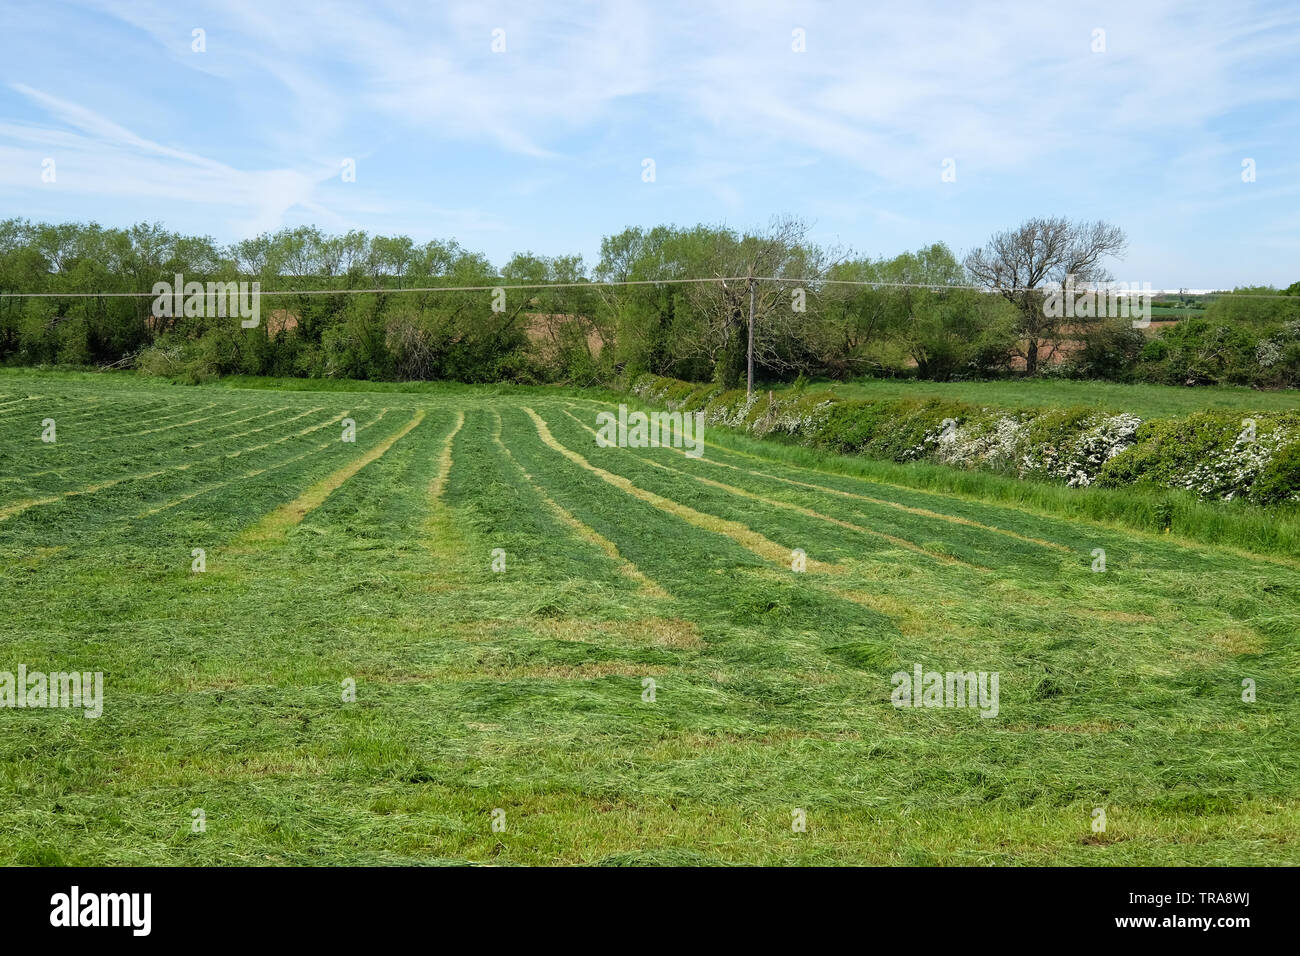 grass cut in a farmers field Stock Photo